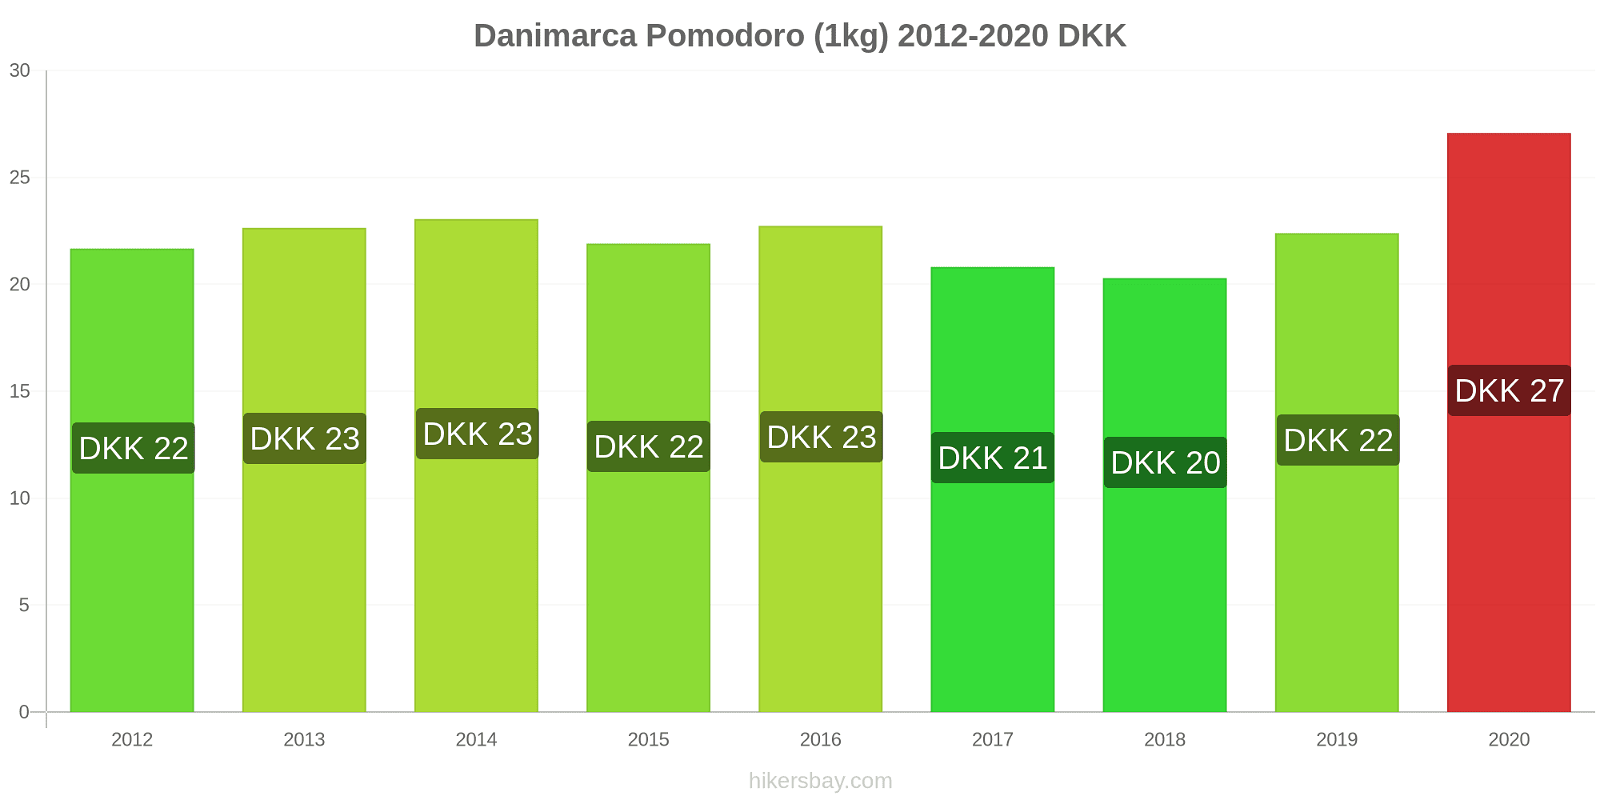 Danimarca variazioni di prezzo Pomodoro (1kg) hikersbay.com